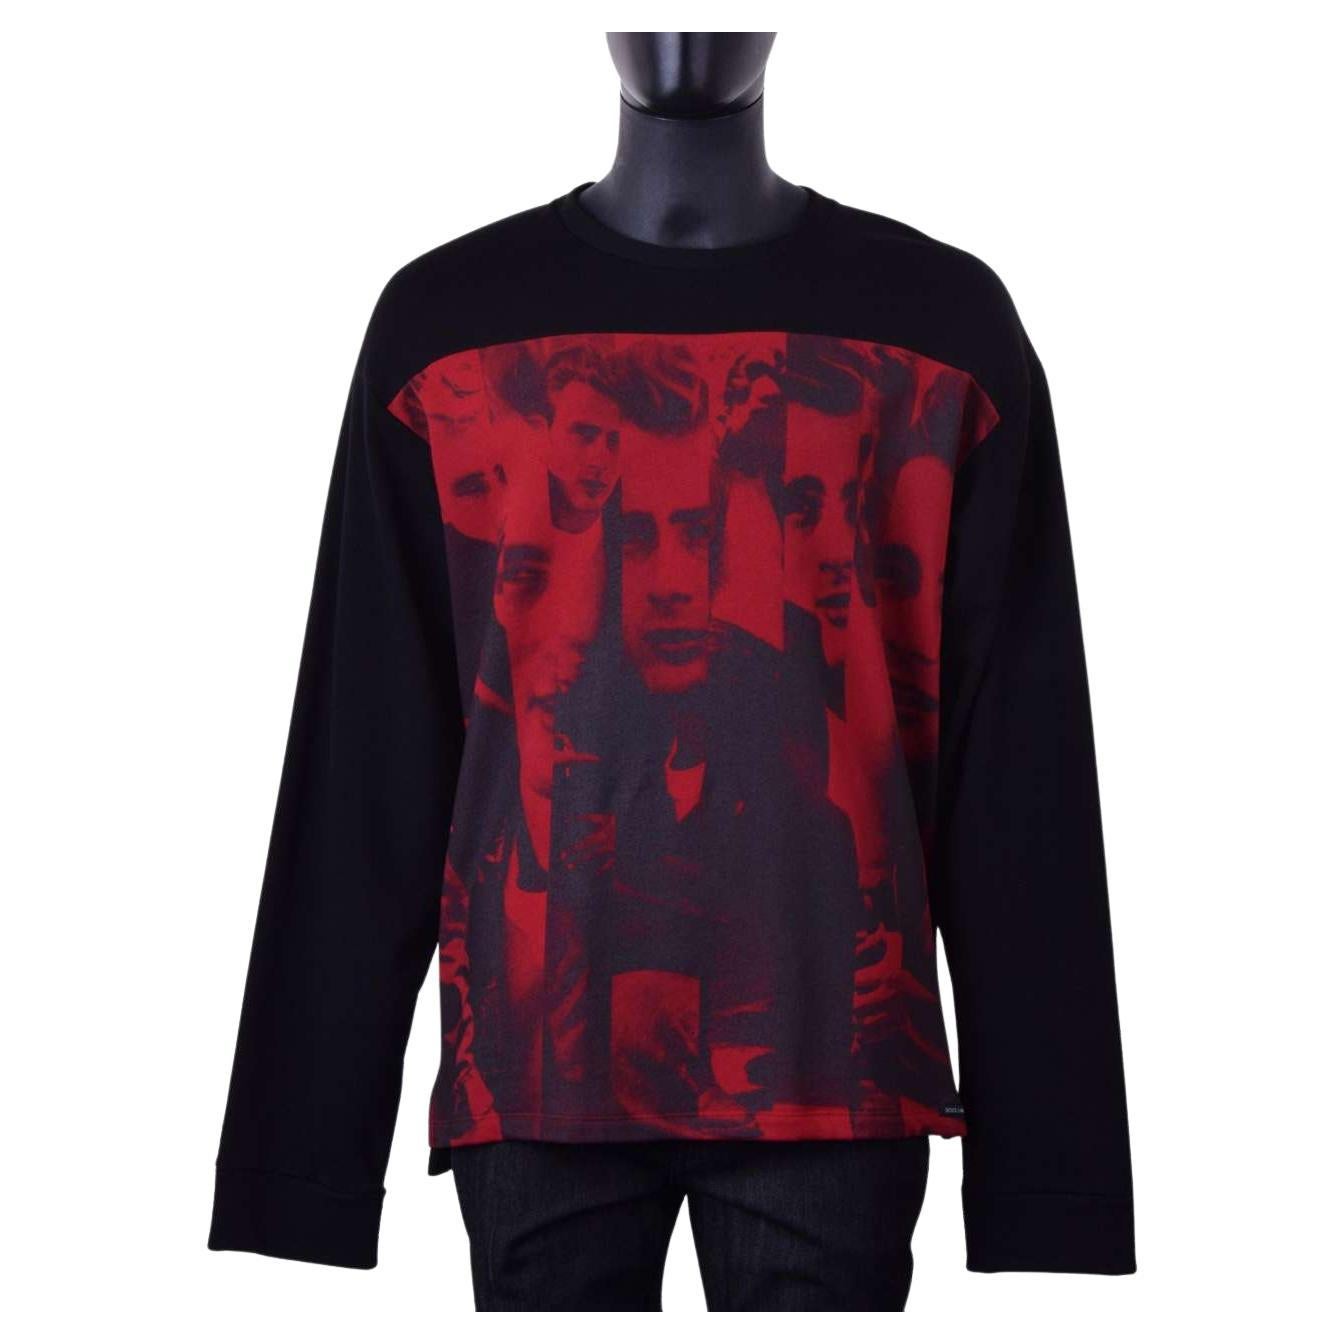 Dolce & Gabbana - James Dean Sweatshirt Sweater For Sale